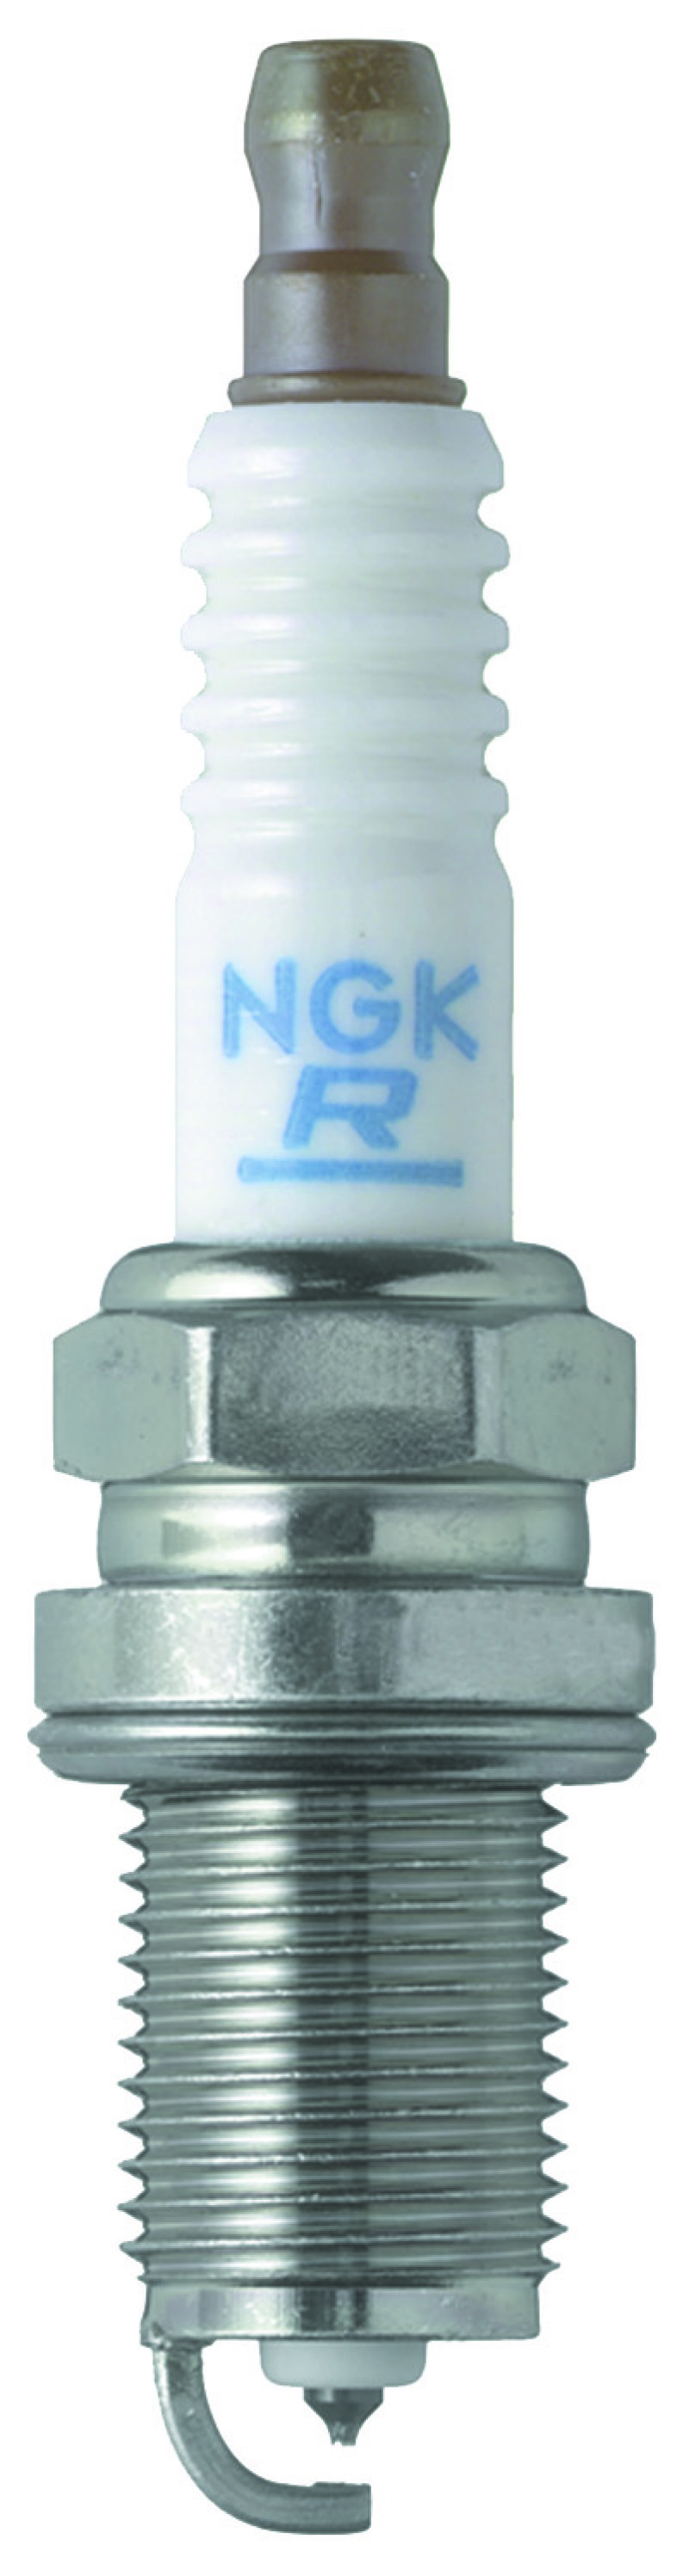 NGK Double Platinum Spark Plug Box of 4 (PFR7B) - 4853